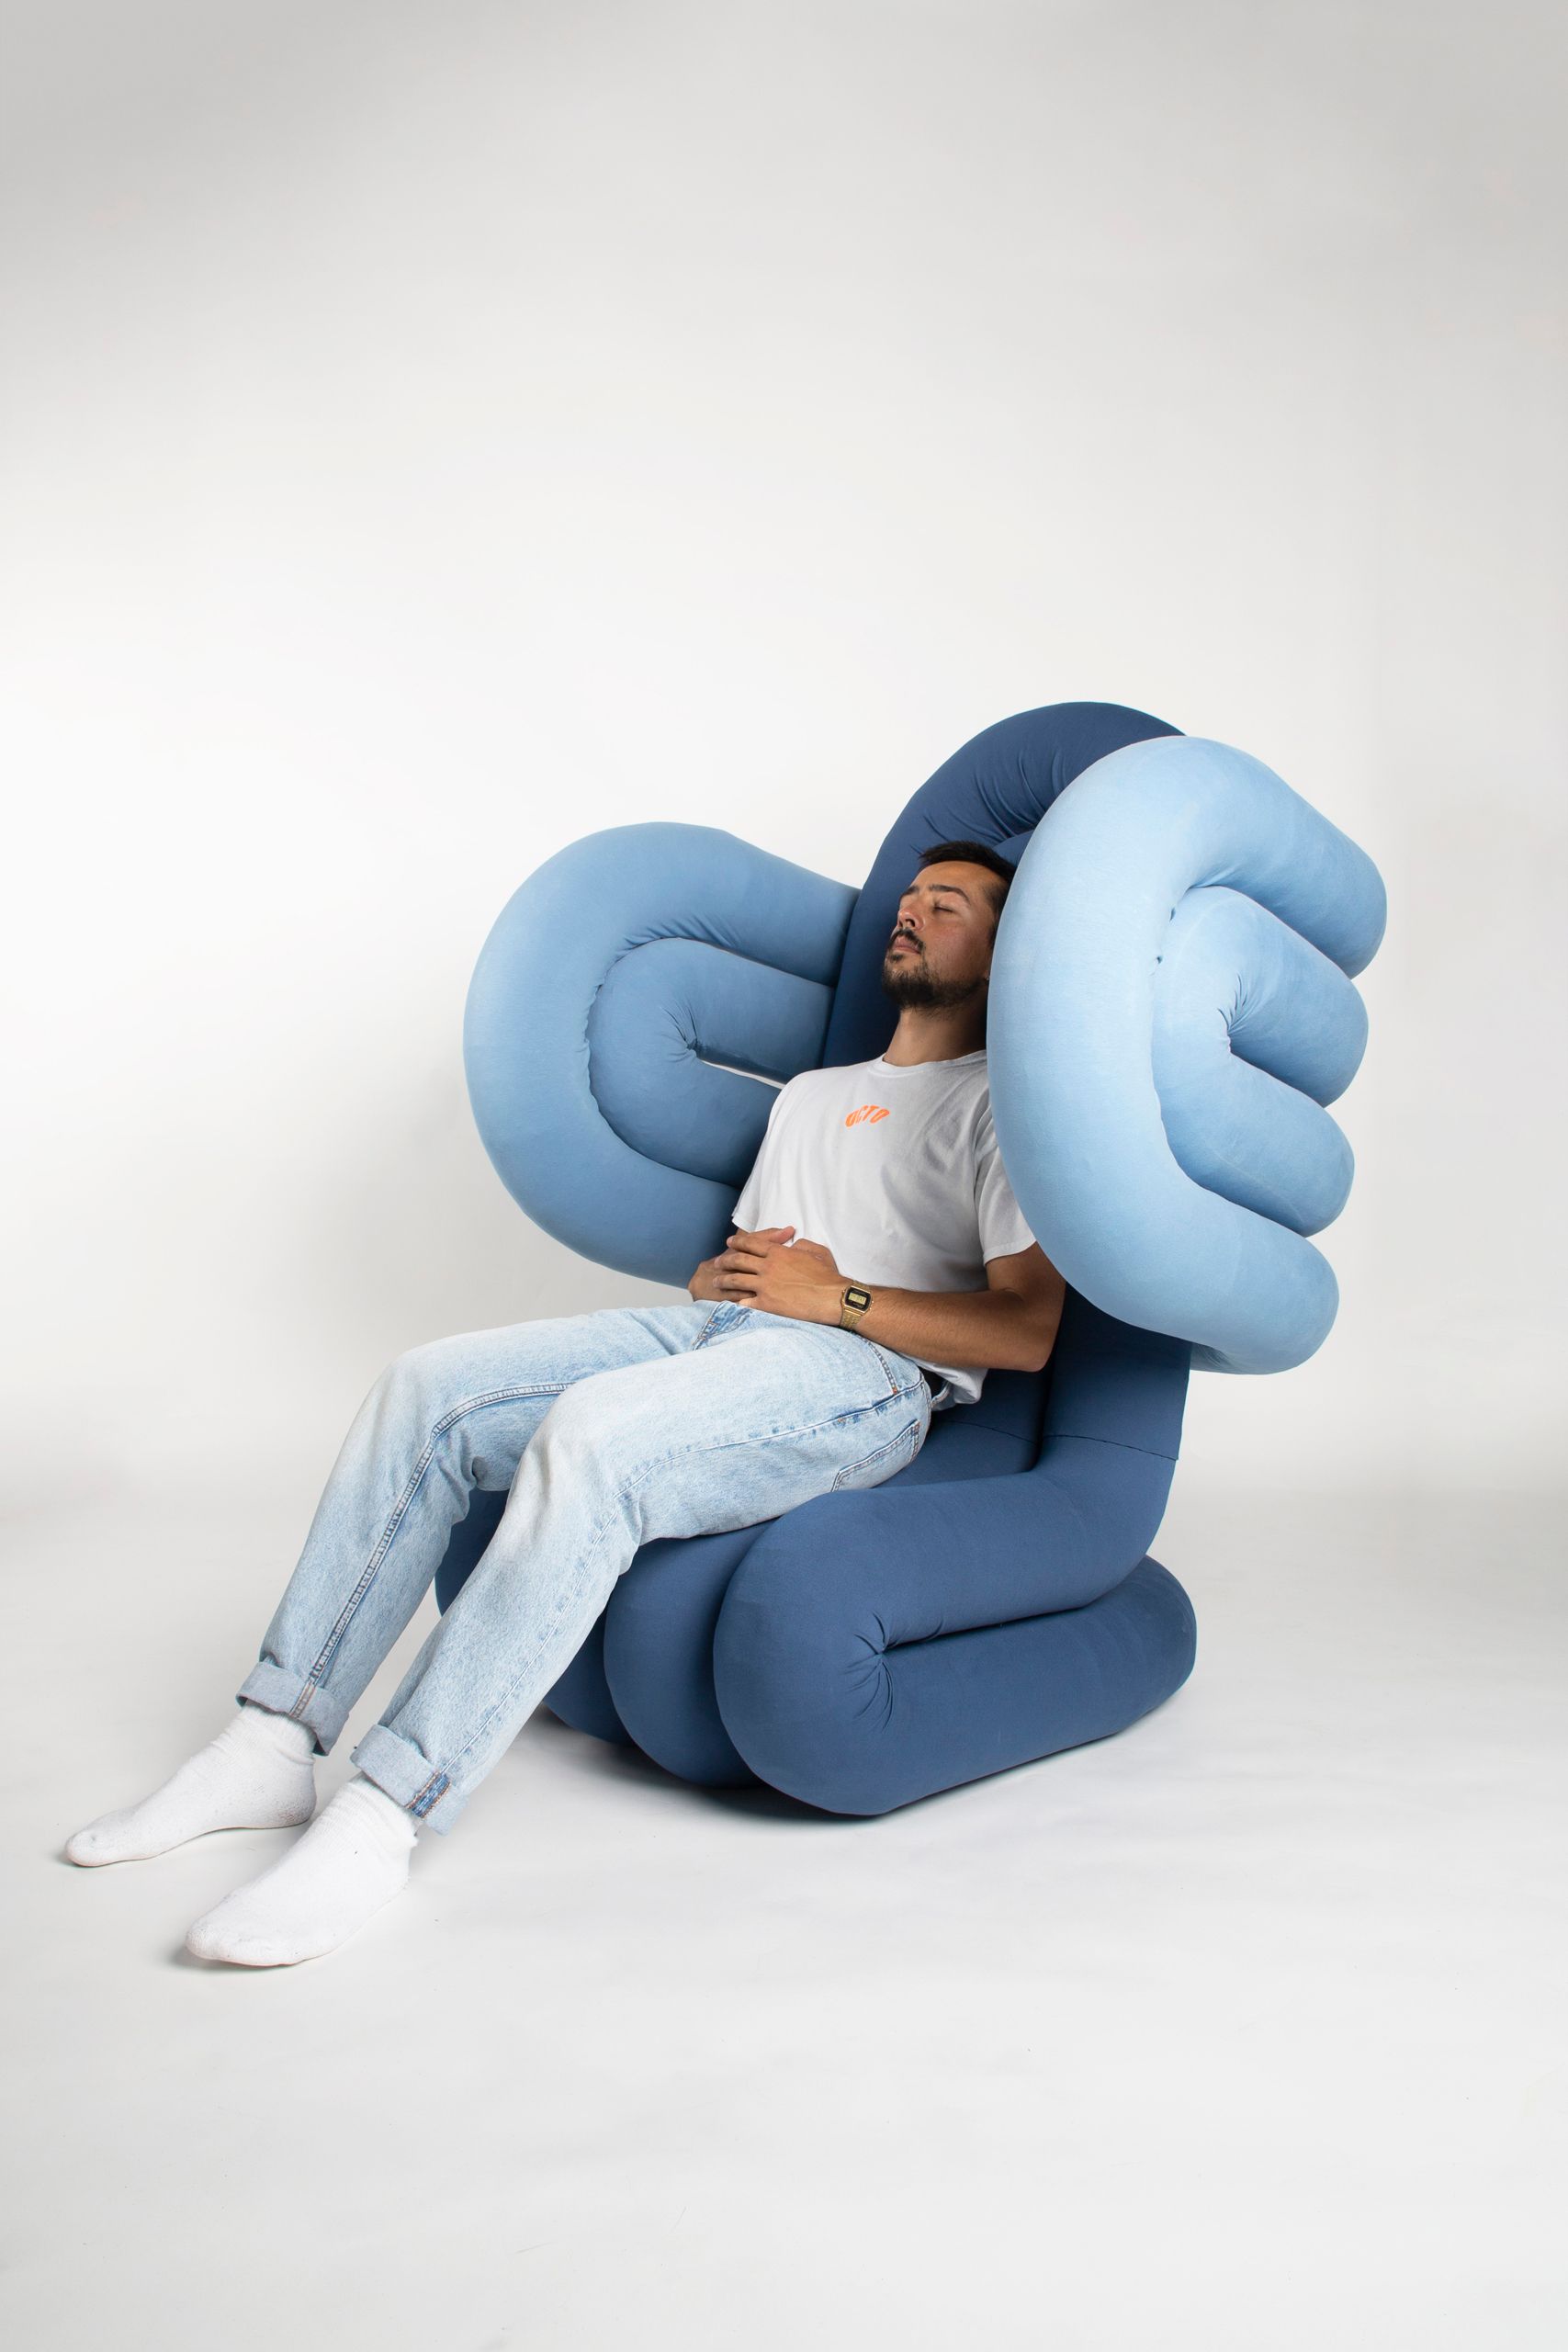 Diploma project bachelor design option interior architecture Bernardes Da Silva Rui-Filipe, lounge chair made of blue fabric buttons